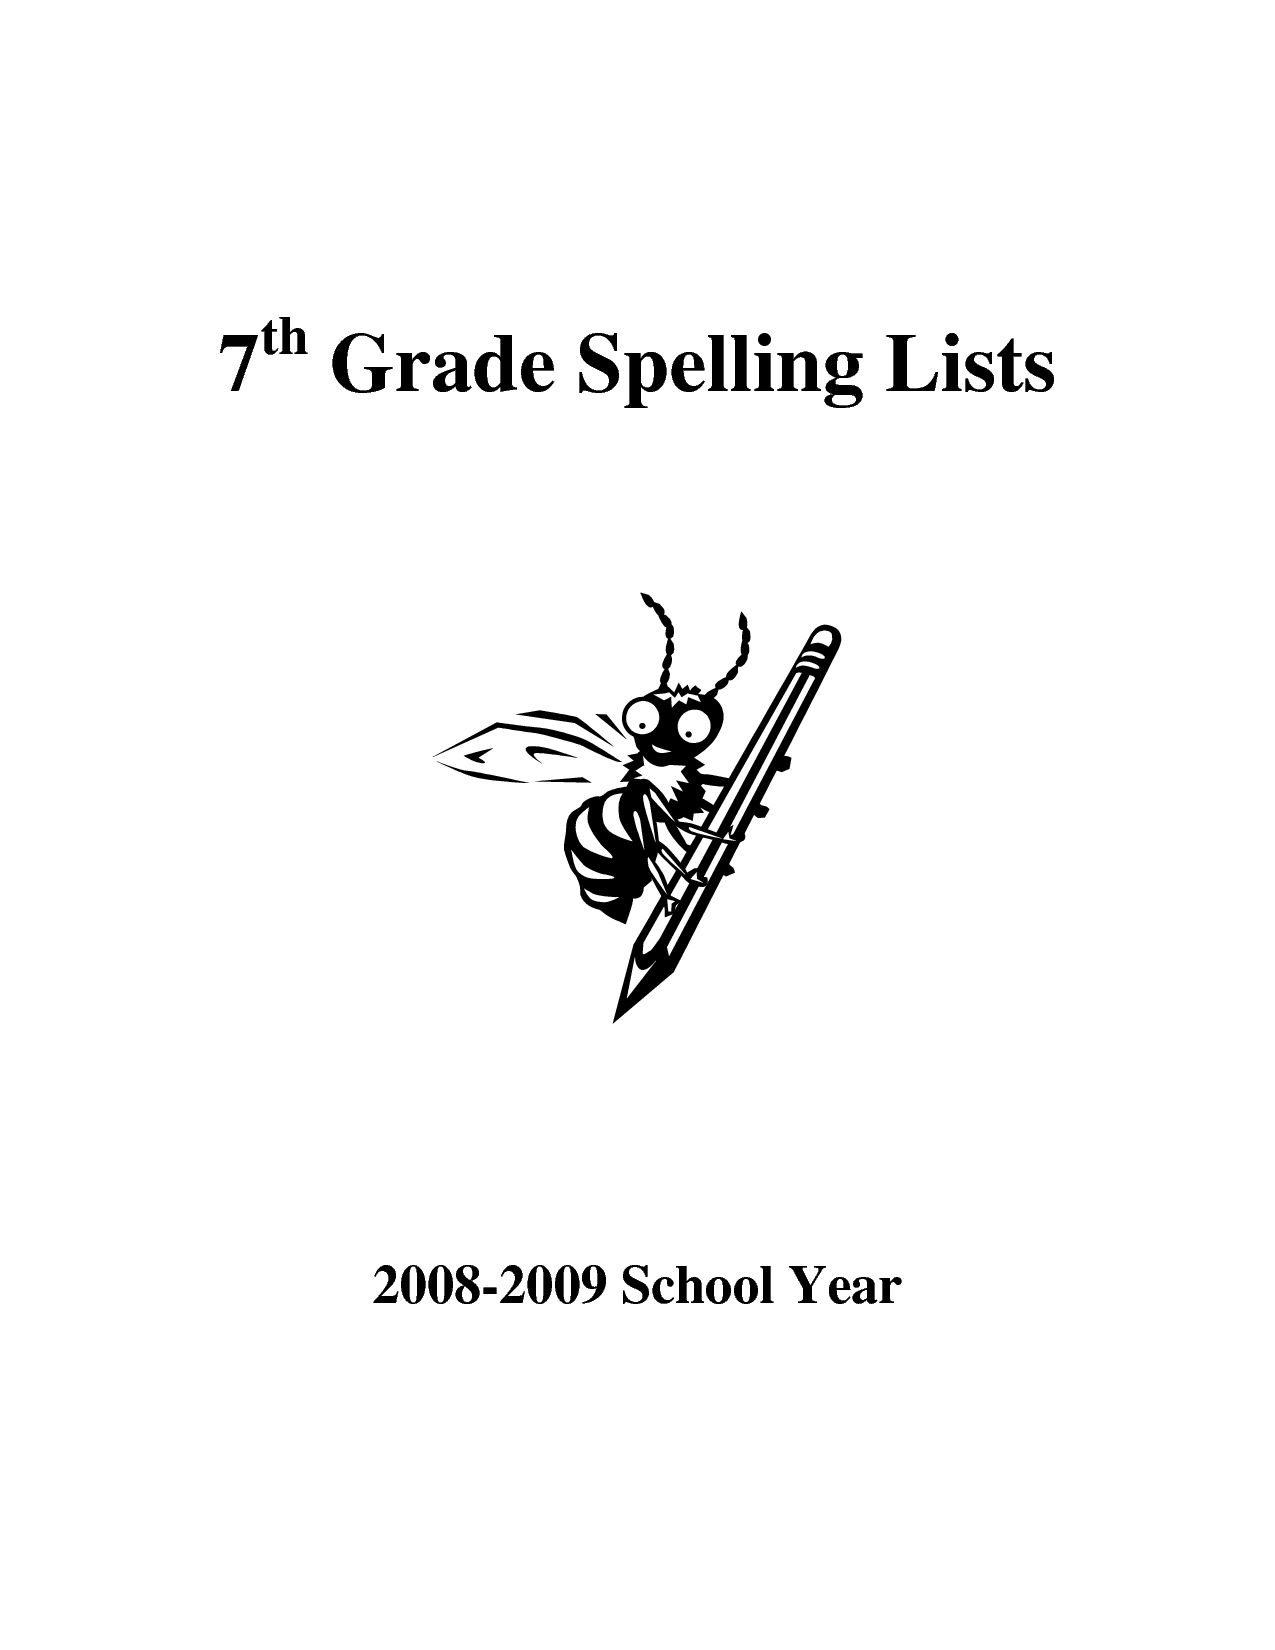 7th Grade Spelling Word List Image